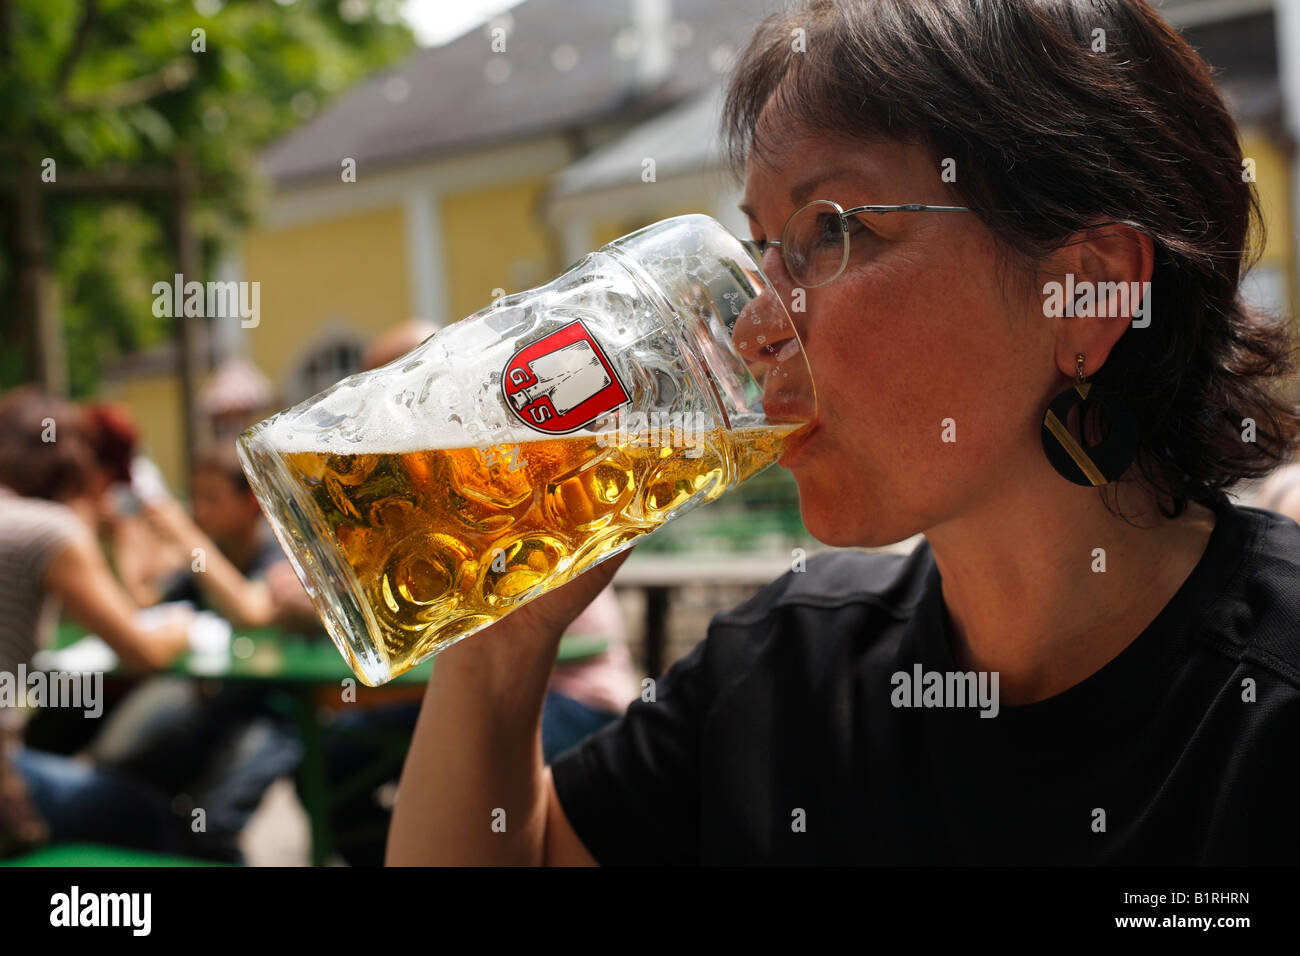 Woman drinking a litre of Spaten brand beer, Taxisgarten Beer Garden, Munich, Bavaria, Germany, Europe Stock Photo